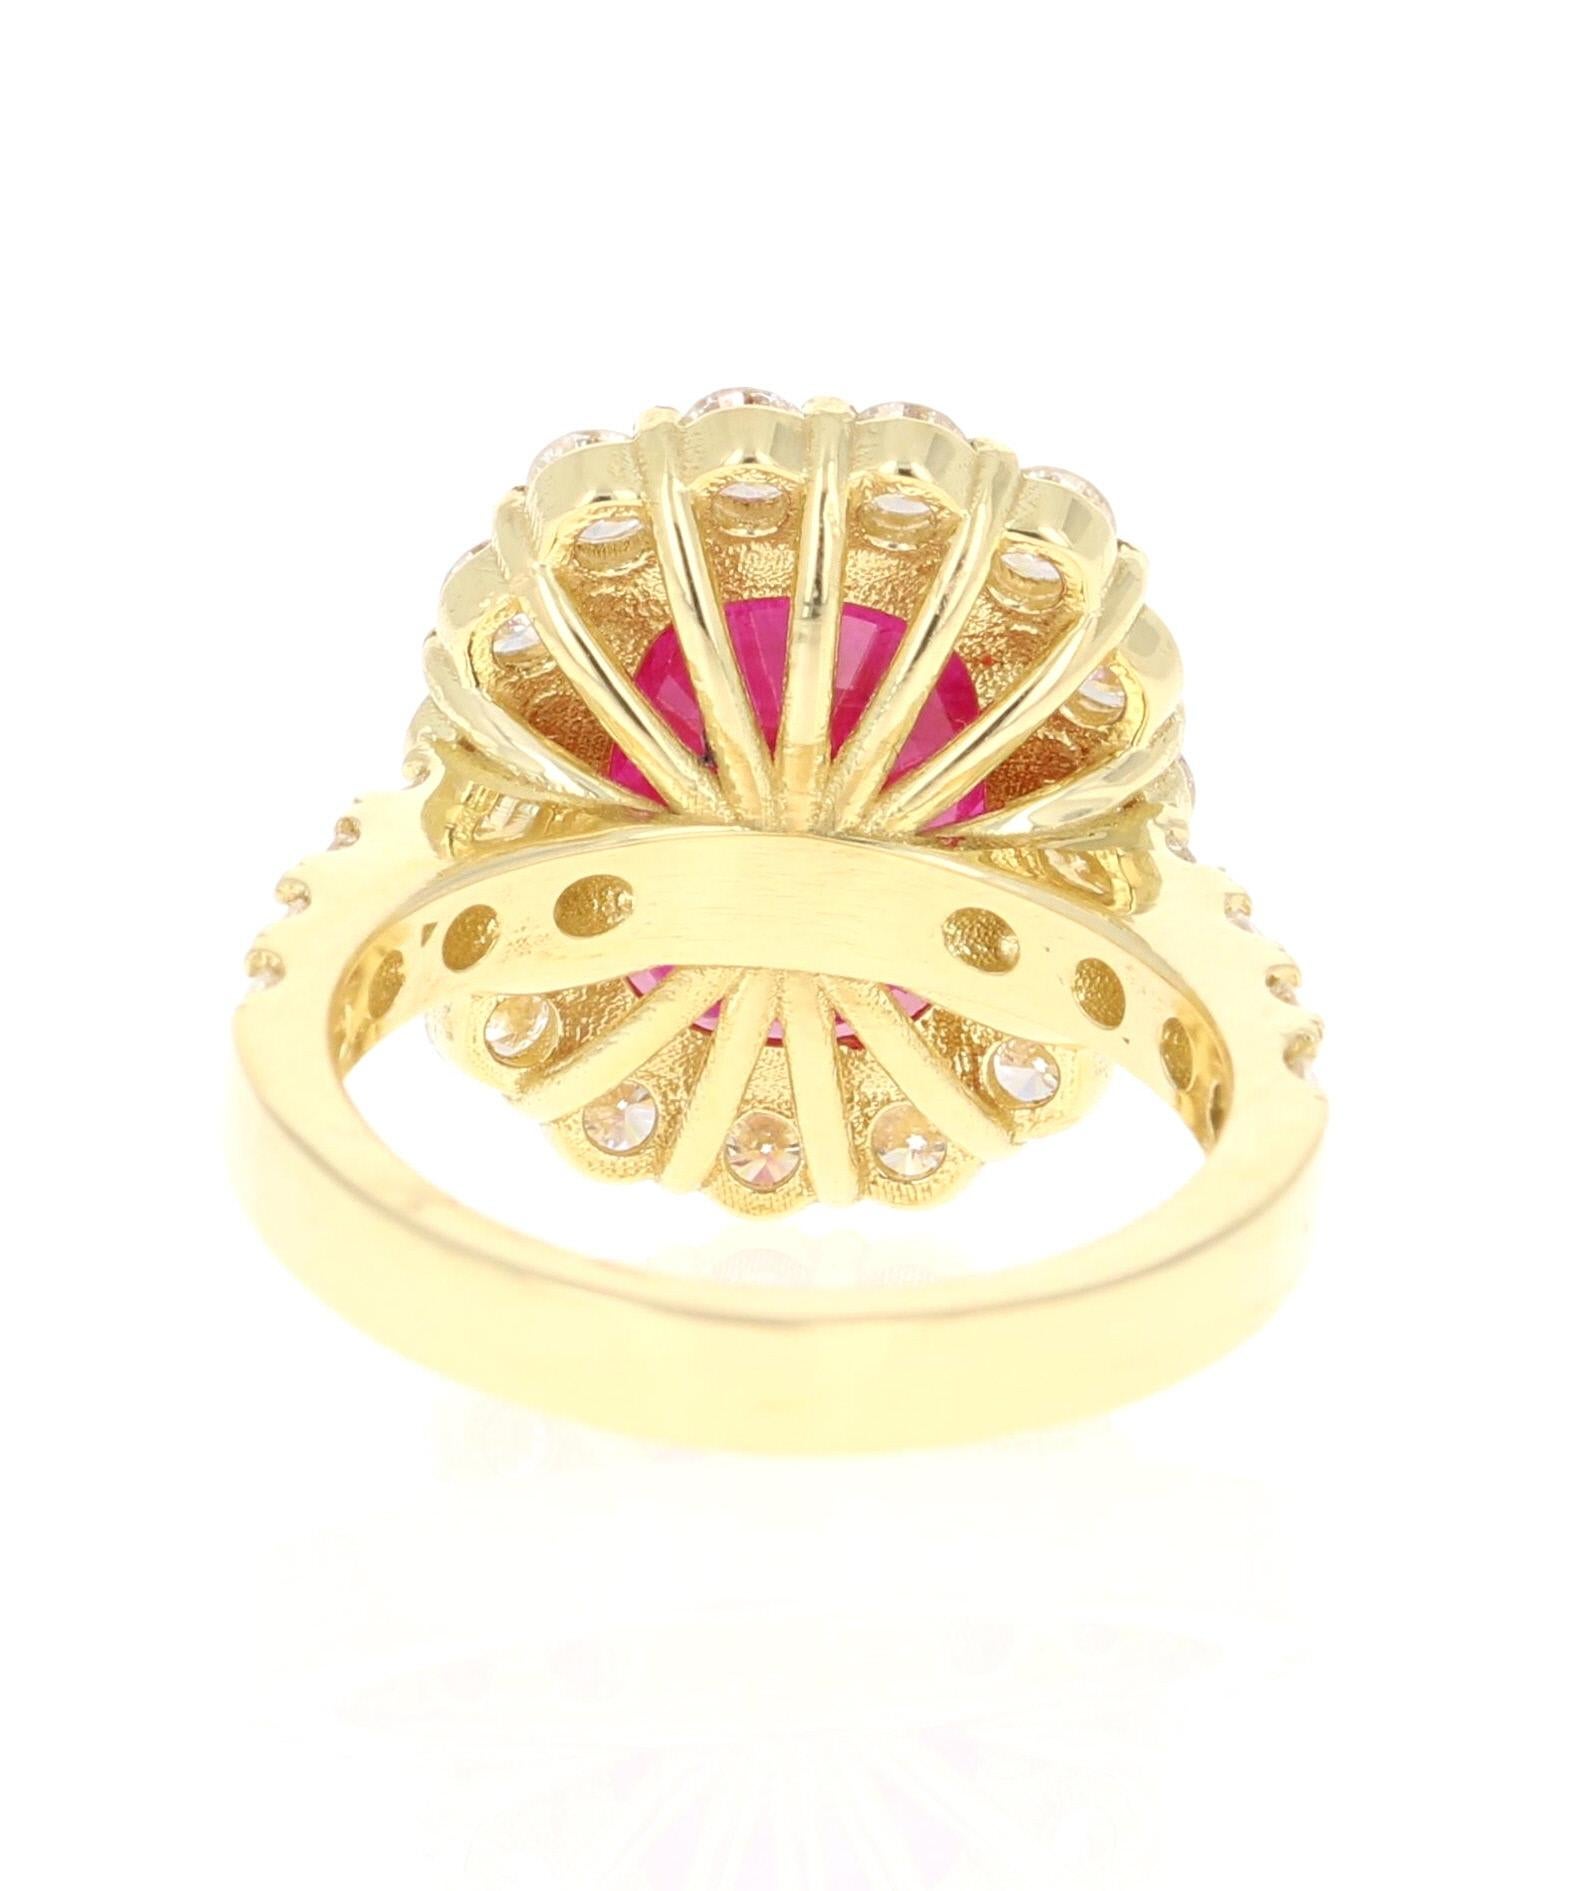 Oval Cut 9.33 Carat Ruby Diamond 18 Karat Yellow Gold Engagement Ring